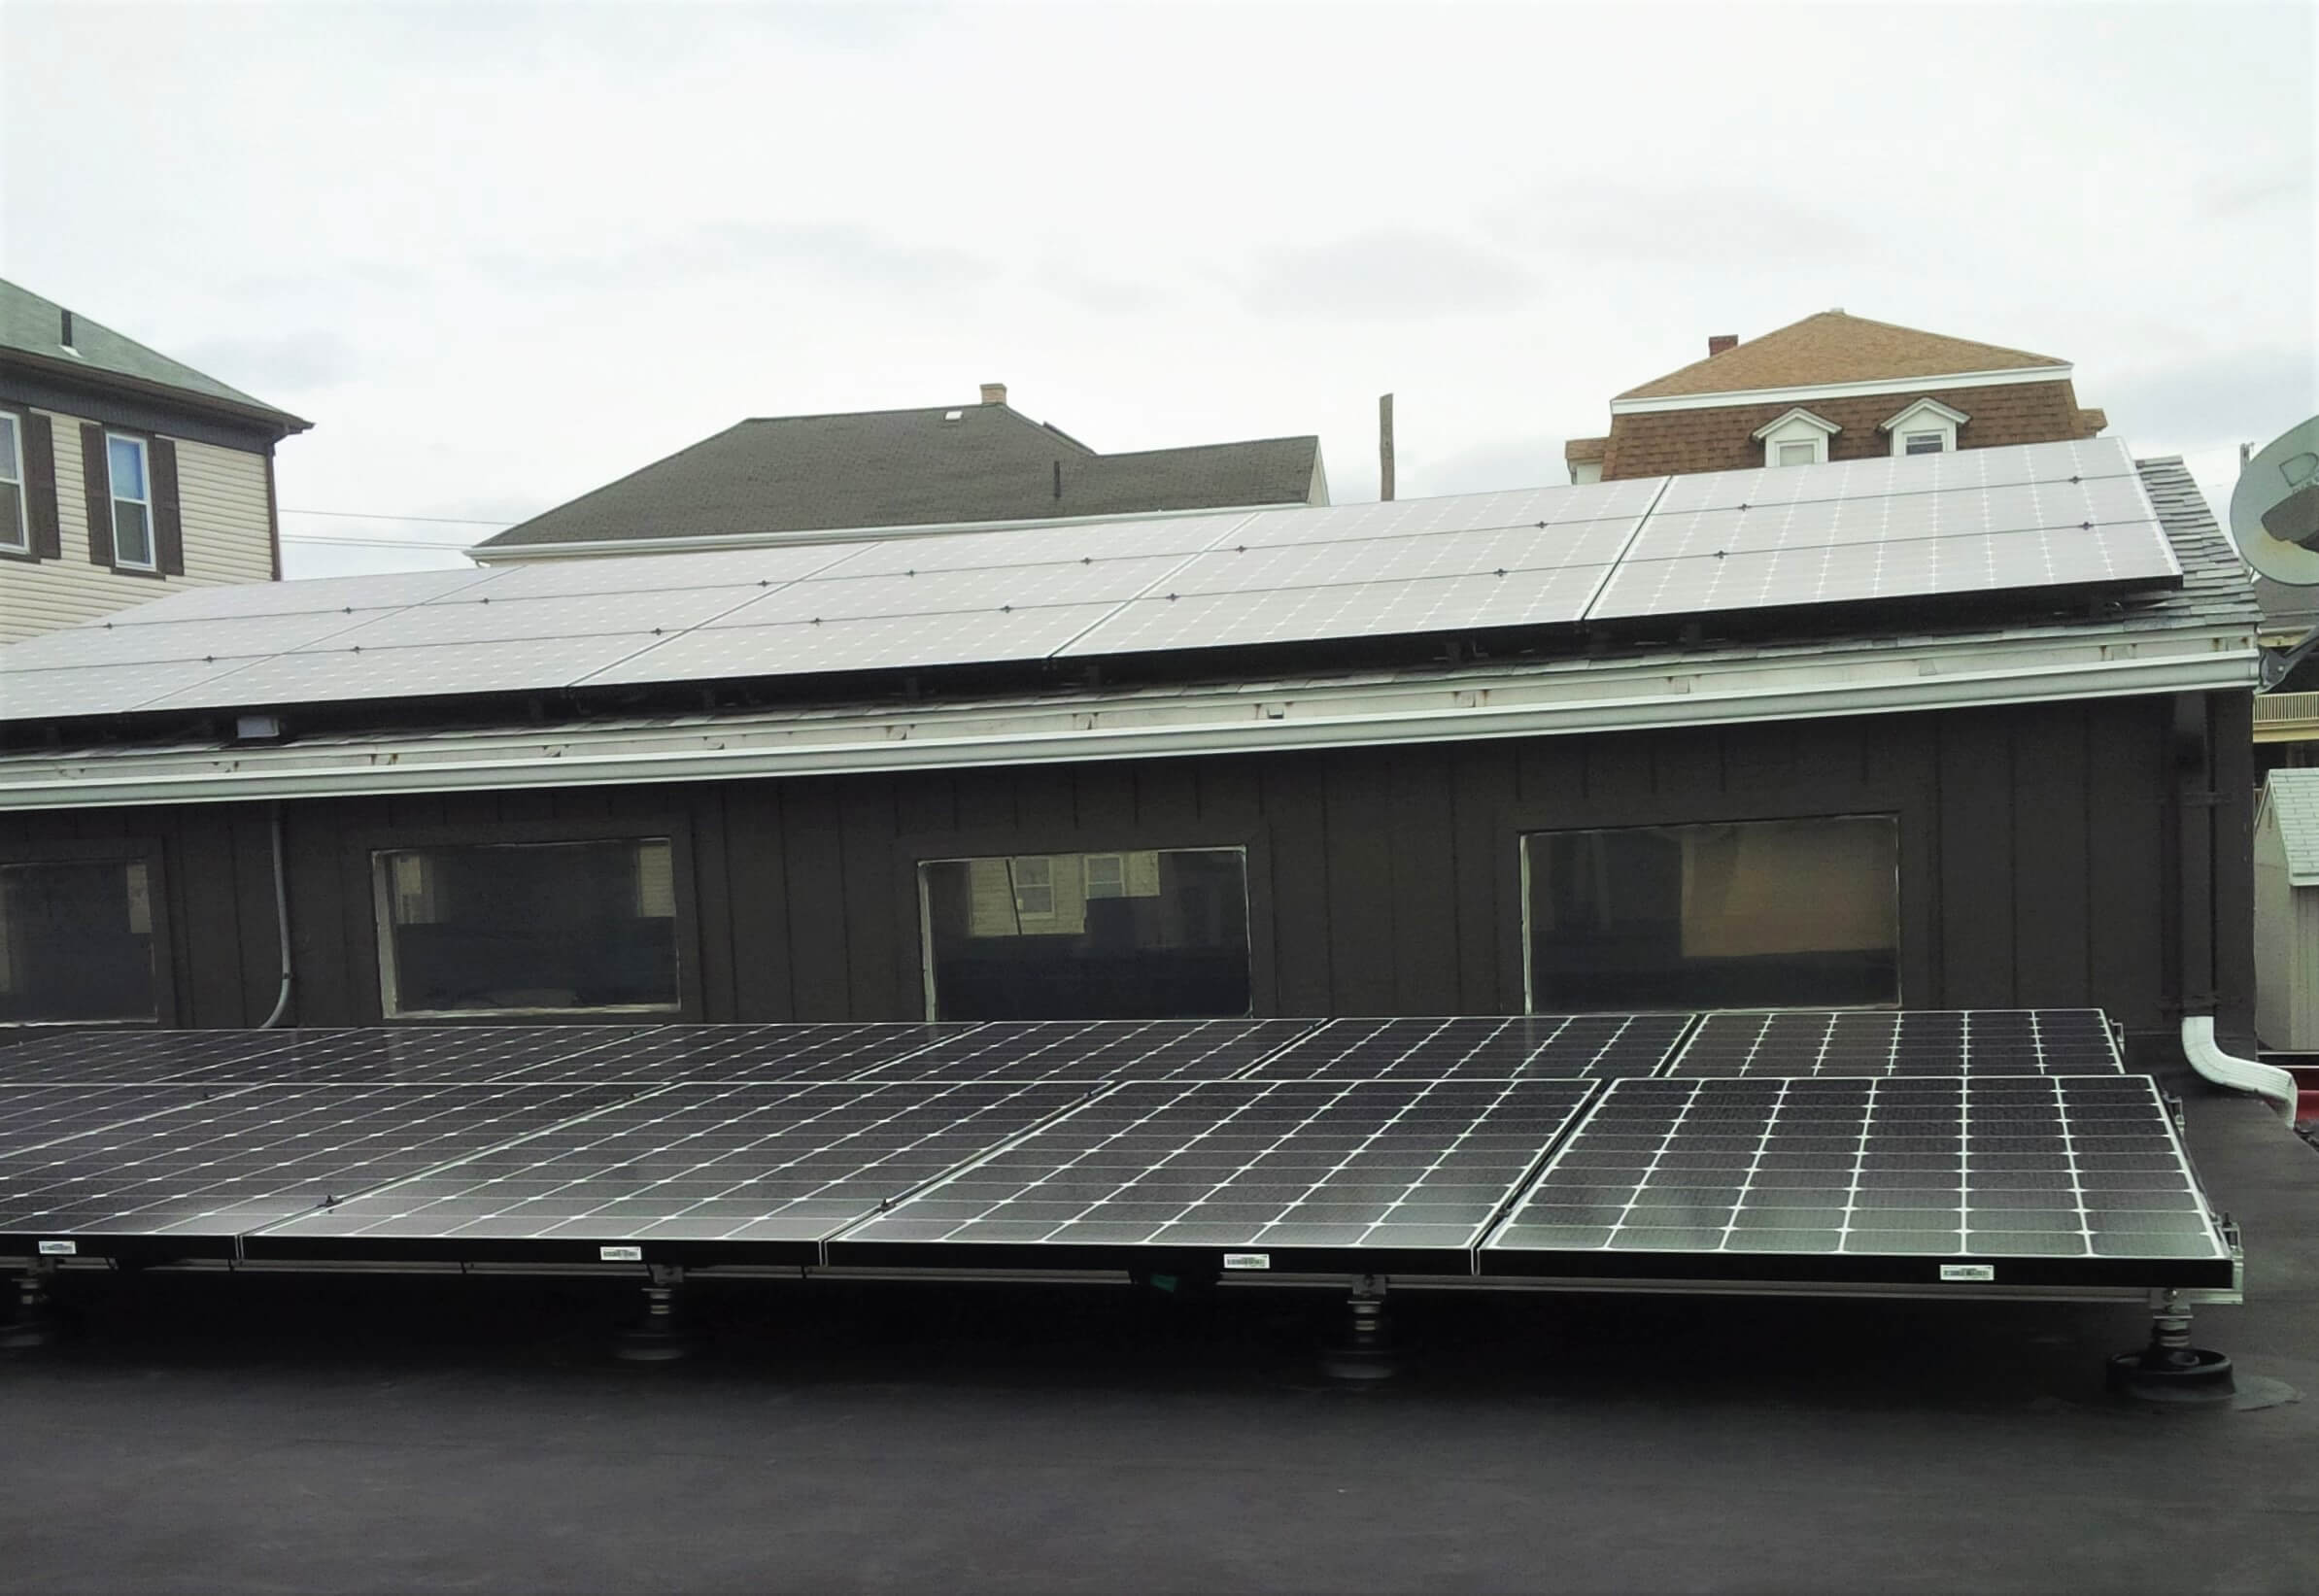 Fall River massachusetts greater boston residential solar installation my generation energy